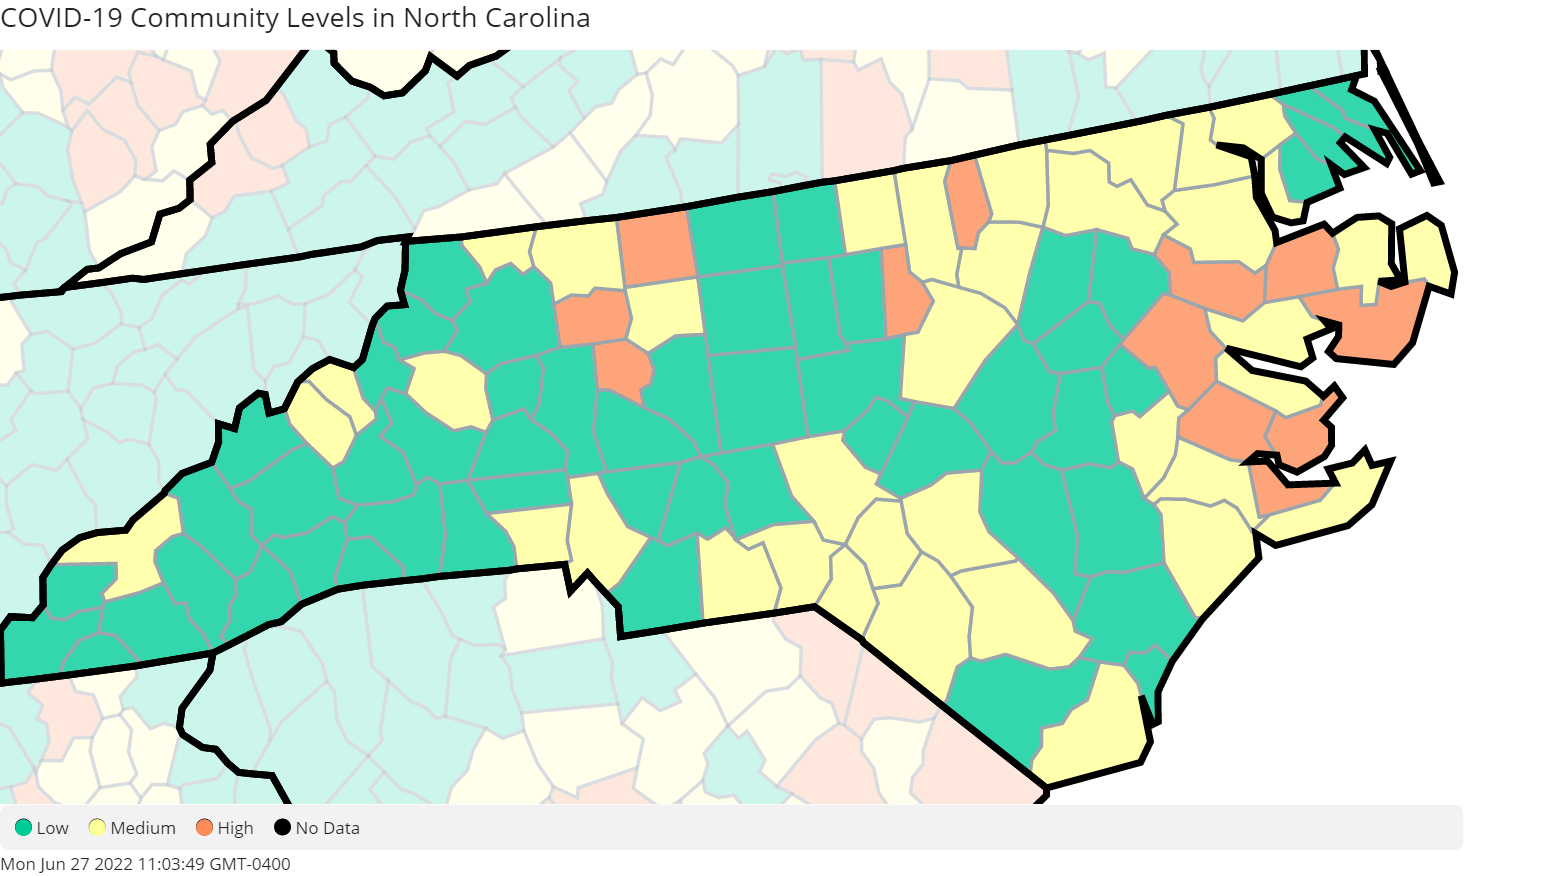 NC COVID-19 Community Levels (as of June 27, 2022)